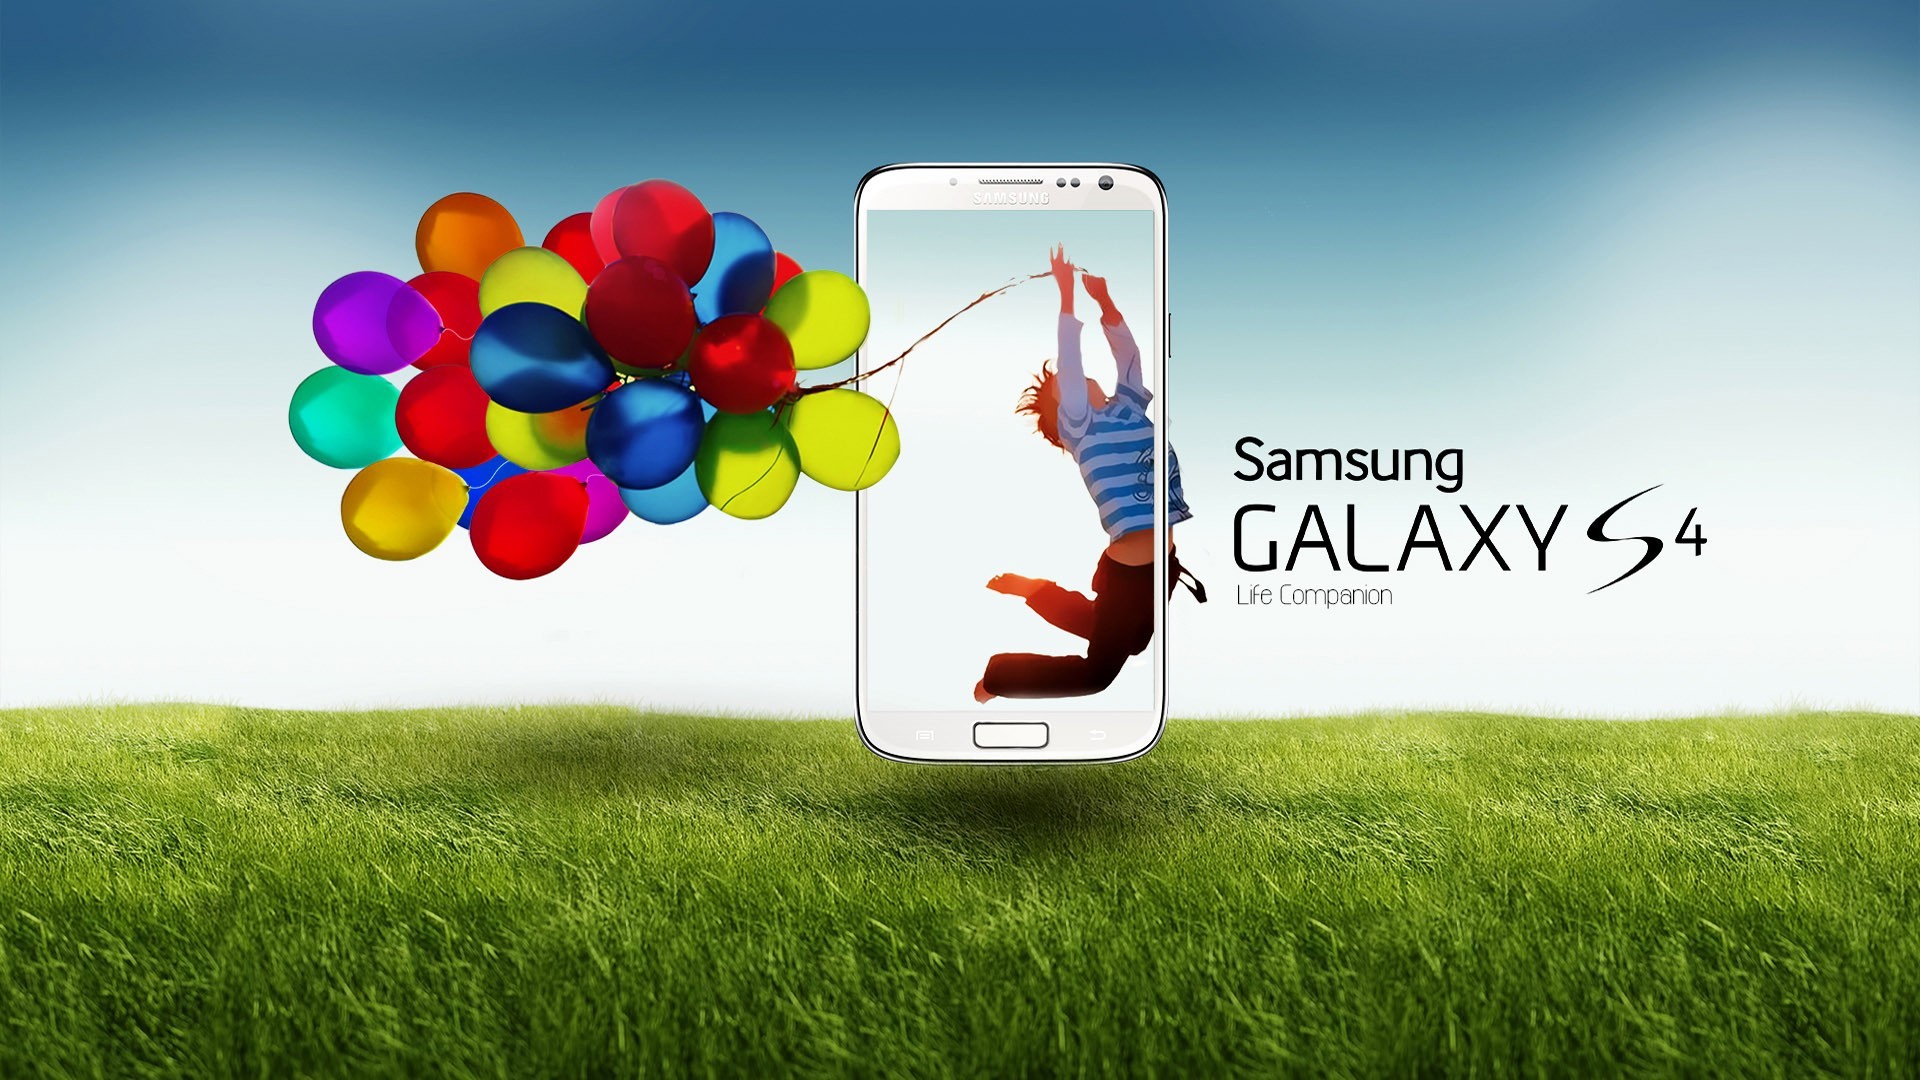 Samsung Galaxy S4 Wallpaper Hd For Pc - HD Wallpaper 